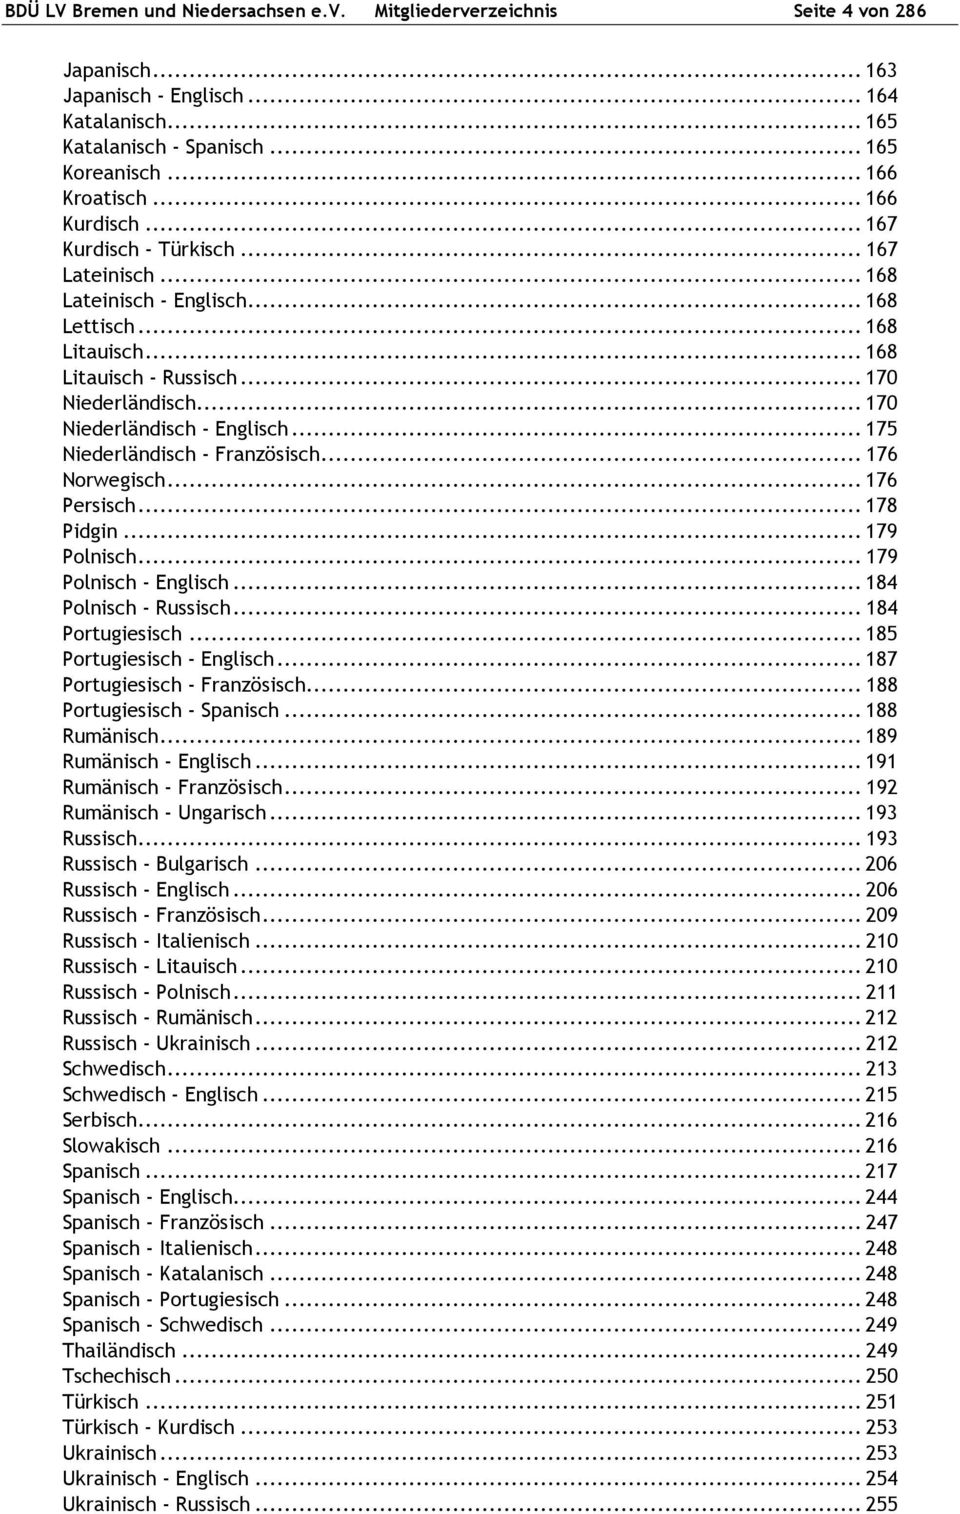 .. 175 Niederländisch -... 176 Norwegisch... 176 Persisch... 178 Pidgin... 179 Polnisch... 179 Polnisch -... 184 Polnisch - Russisch... 184 Portugiesisch... 185 Portugiesisch -... 187 Portugiesisch -.